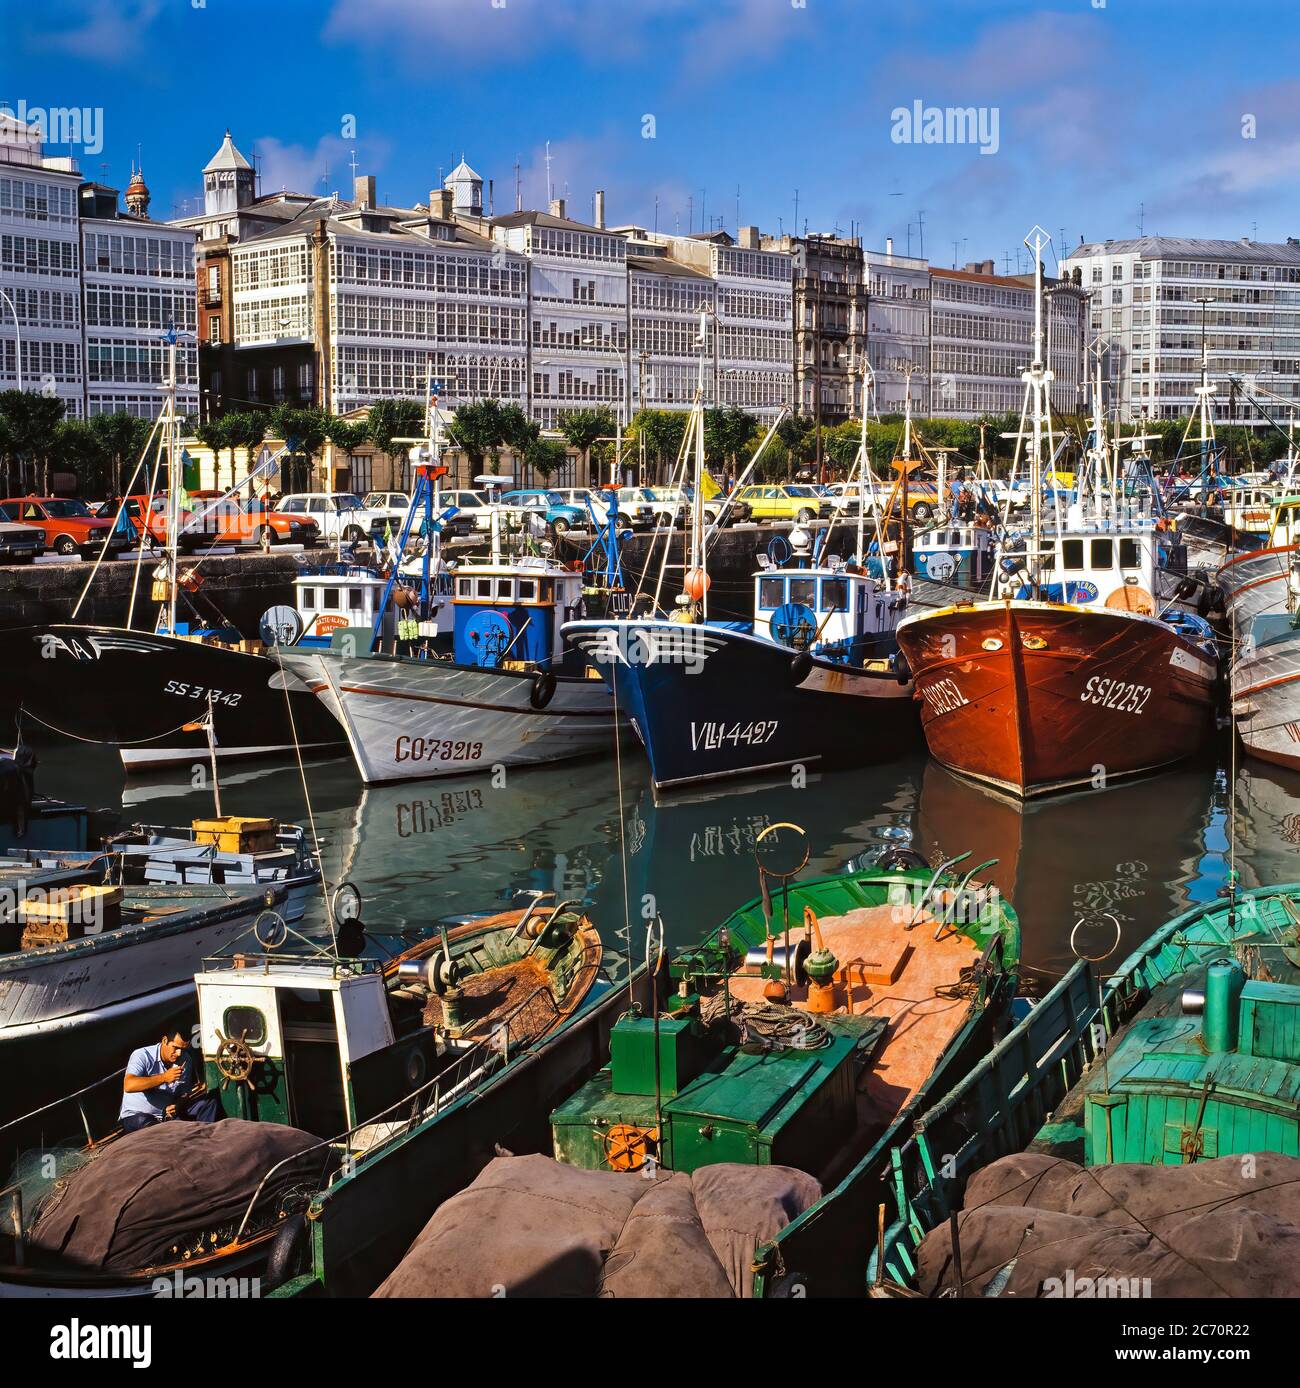 Puertos pesqueros galicia fotografías e imágenes de alta resolución - Alamy